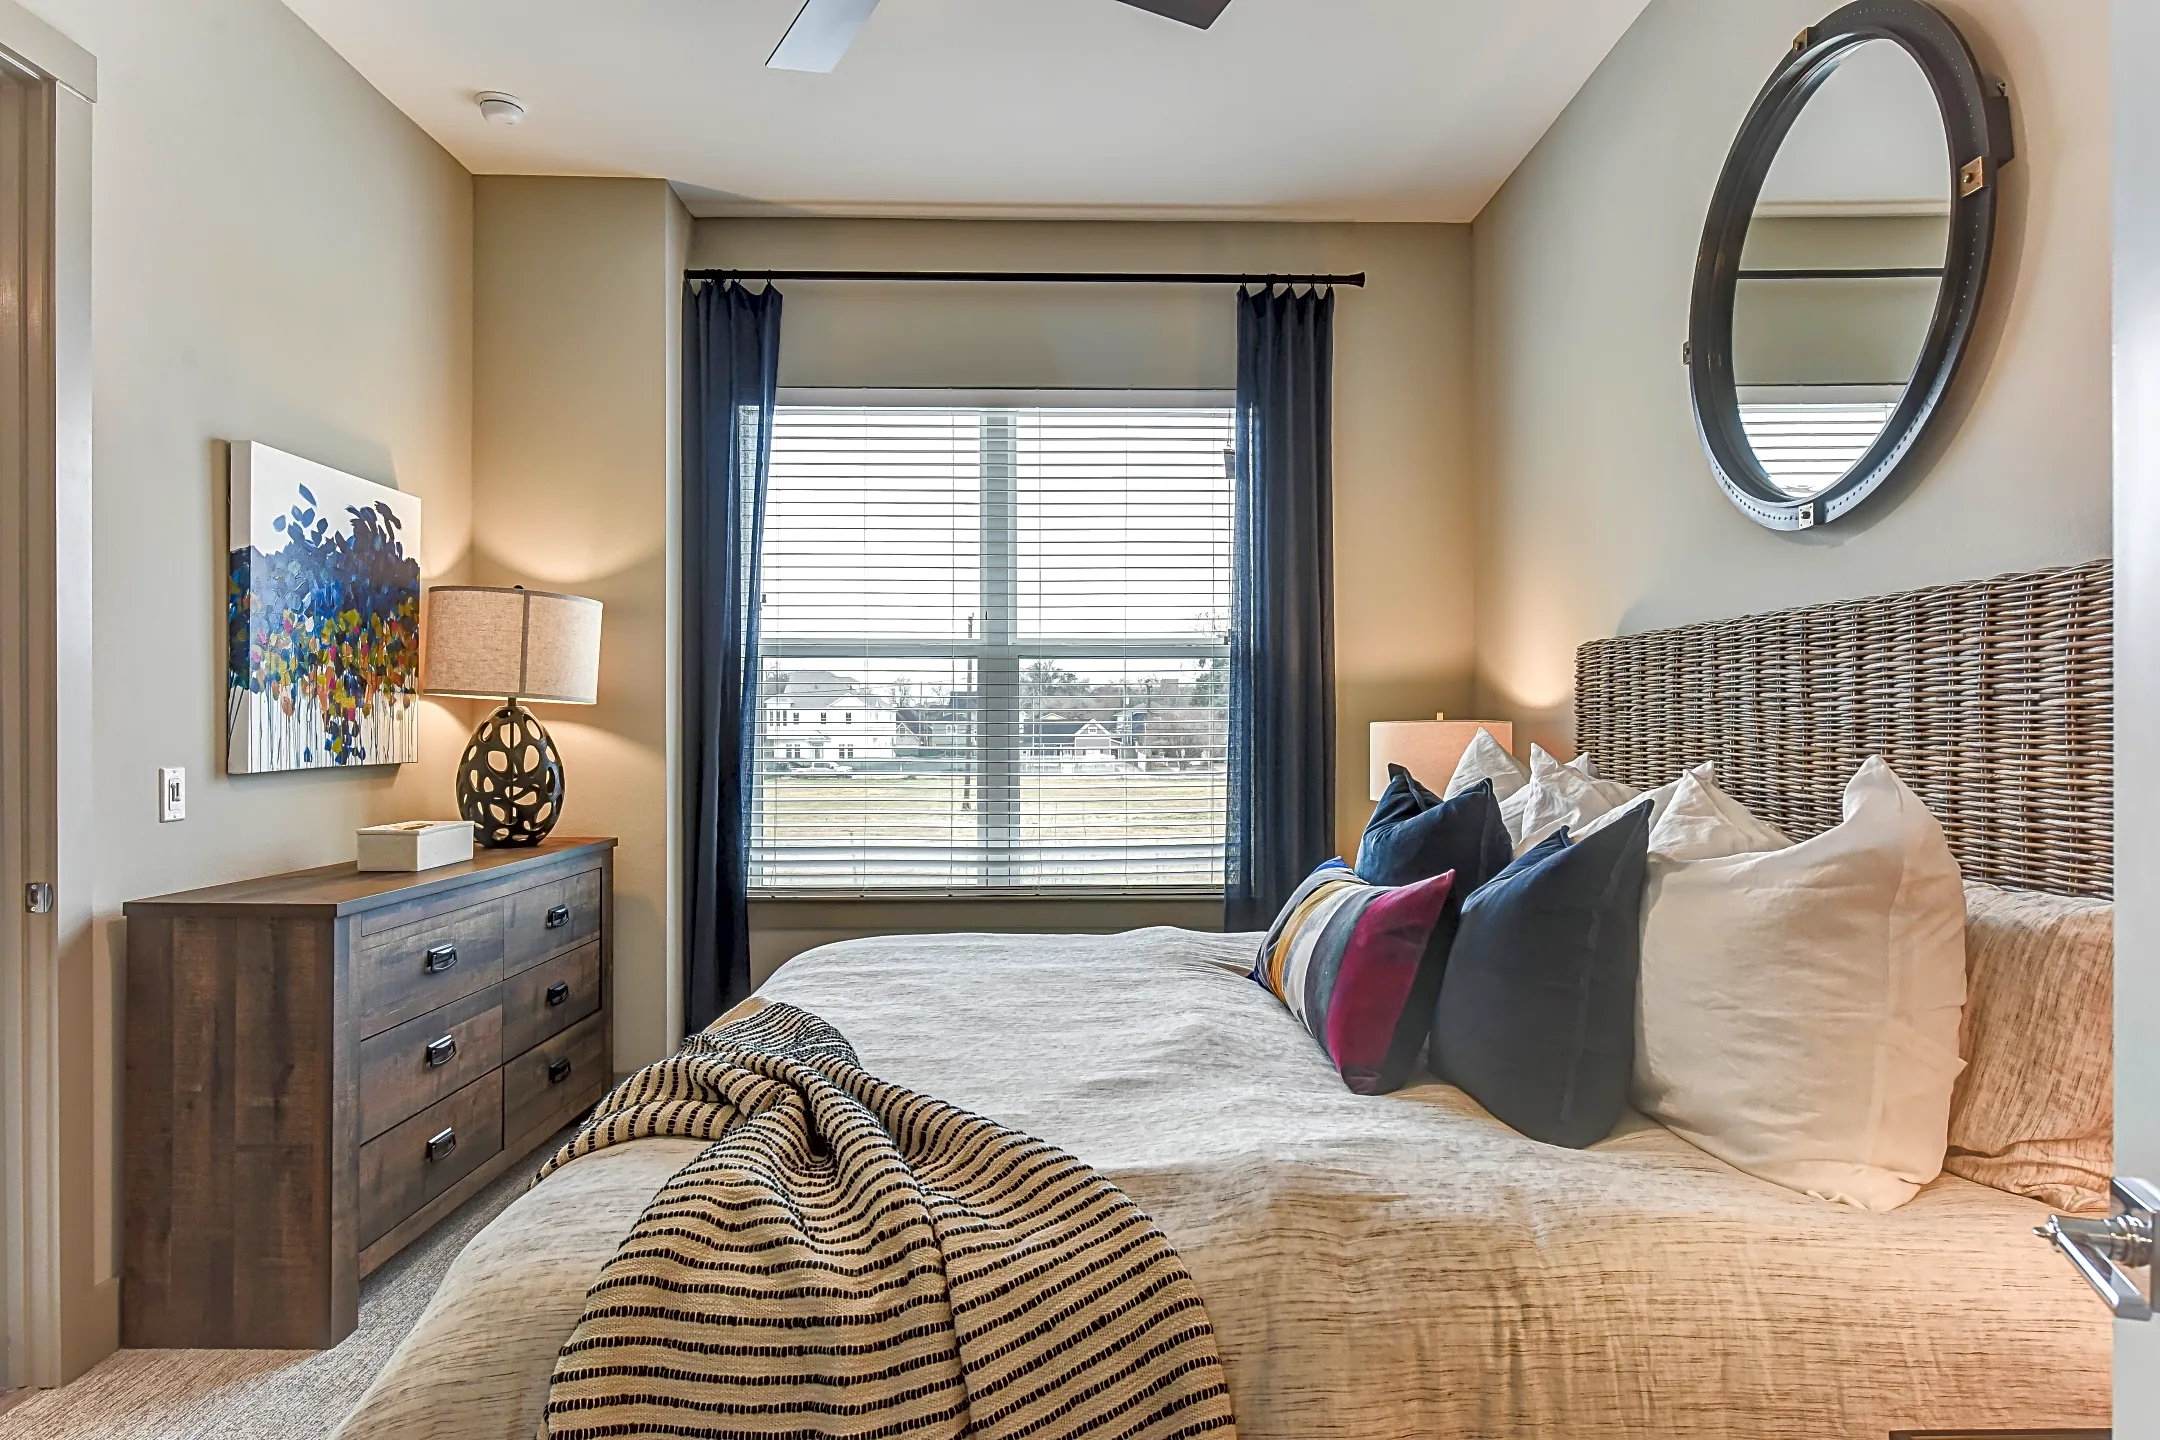 Bedroom - Domain Heights Apartments - Houston, TX